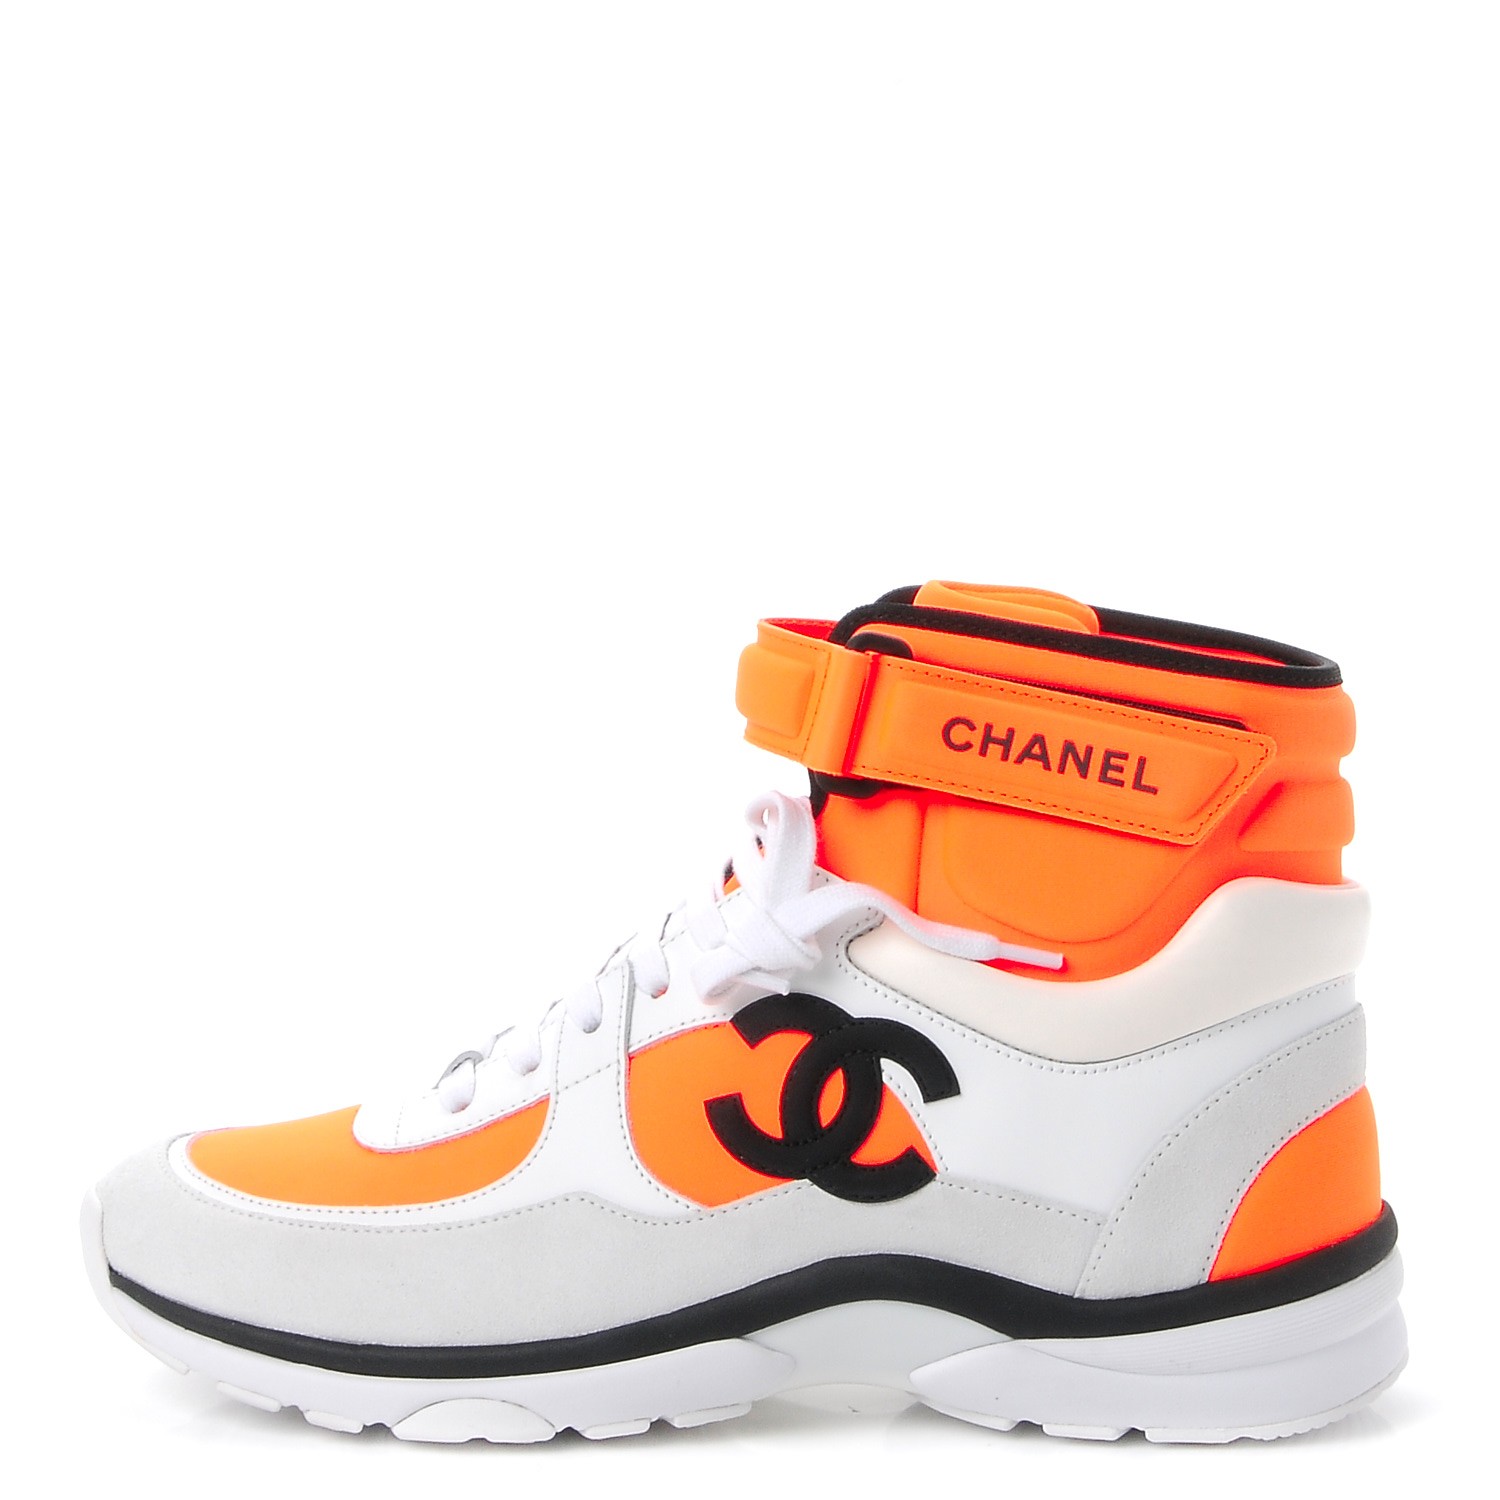 chanel neon orange sneakers